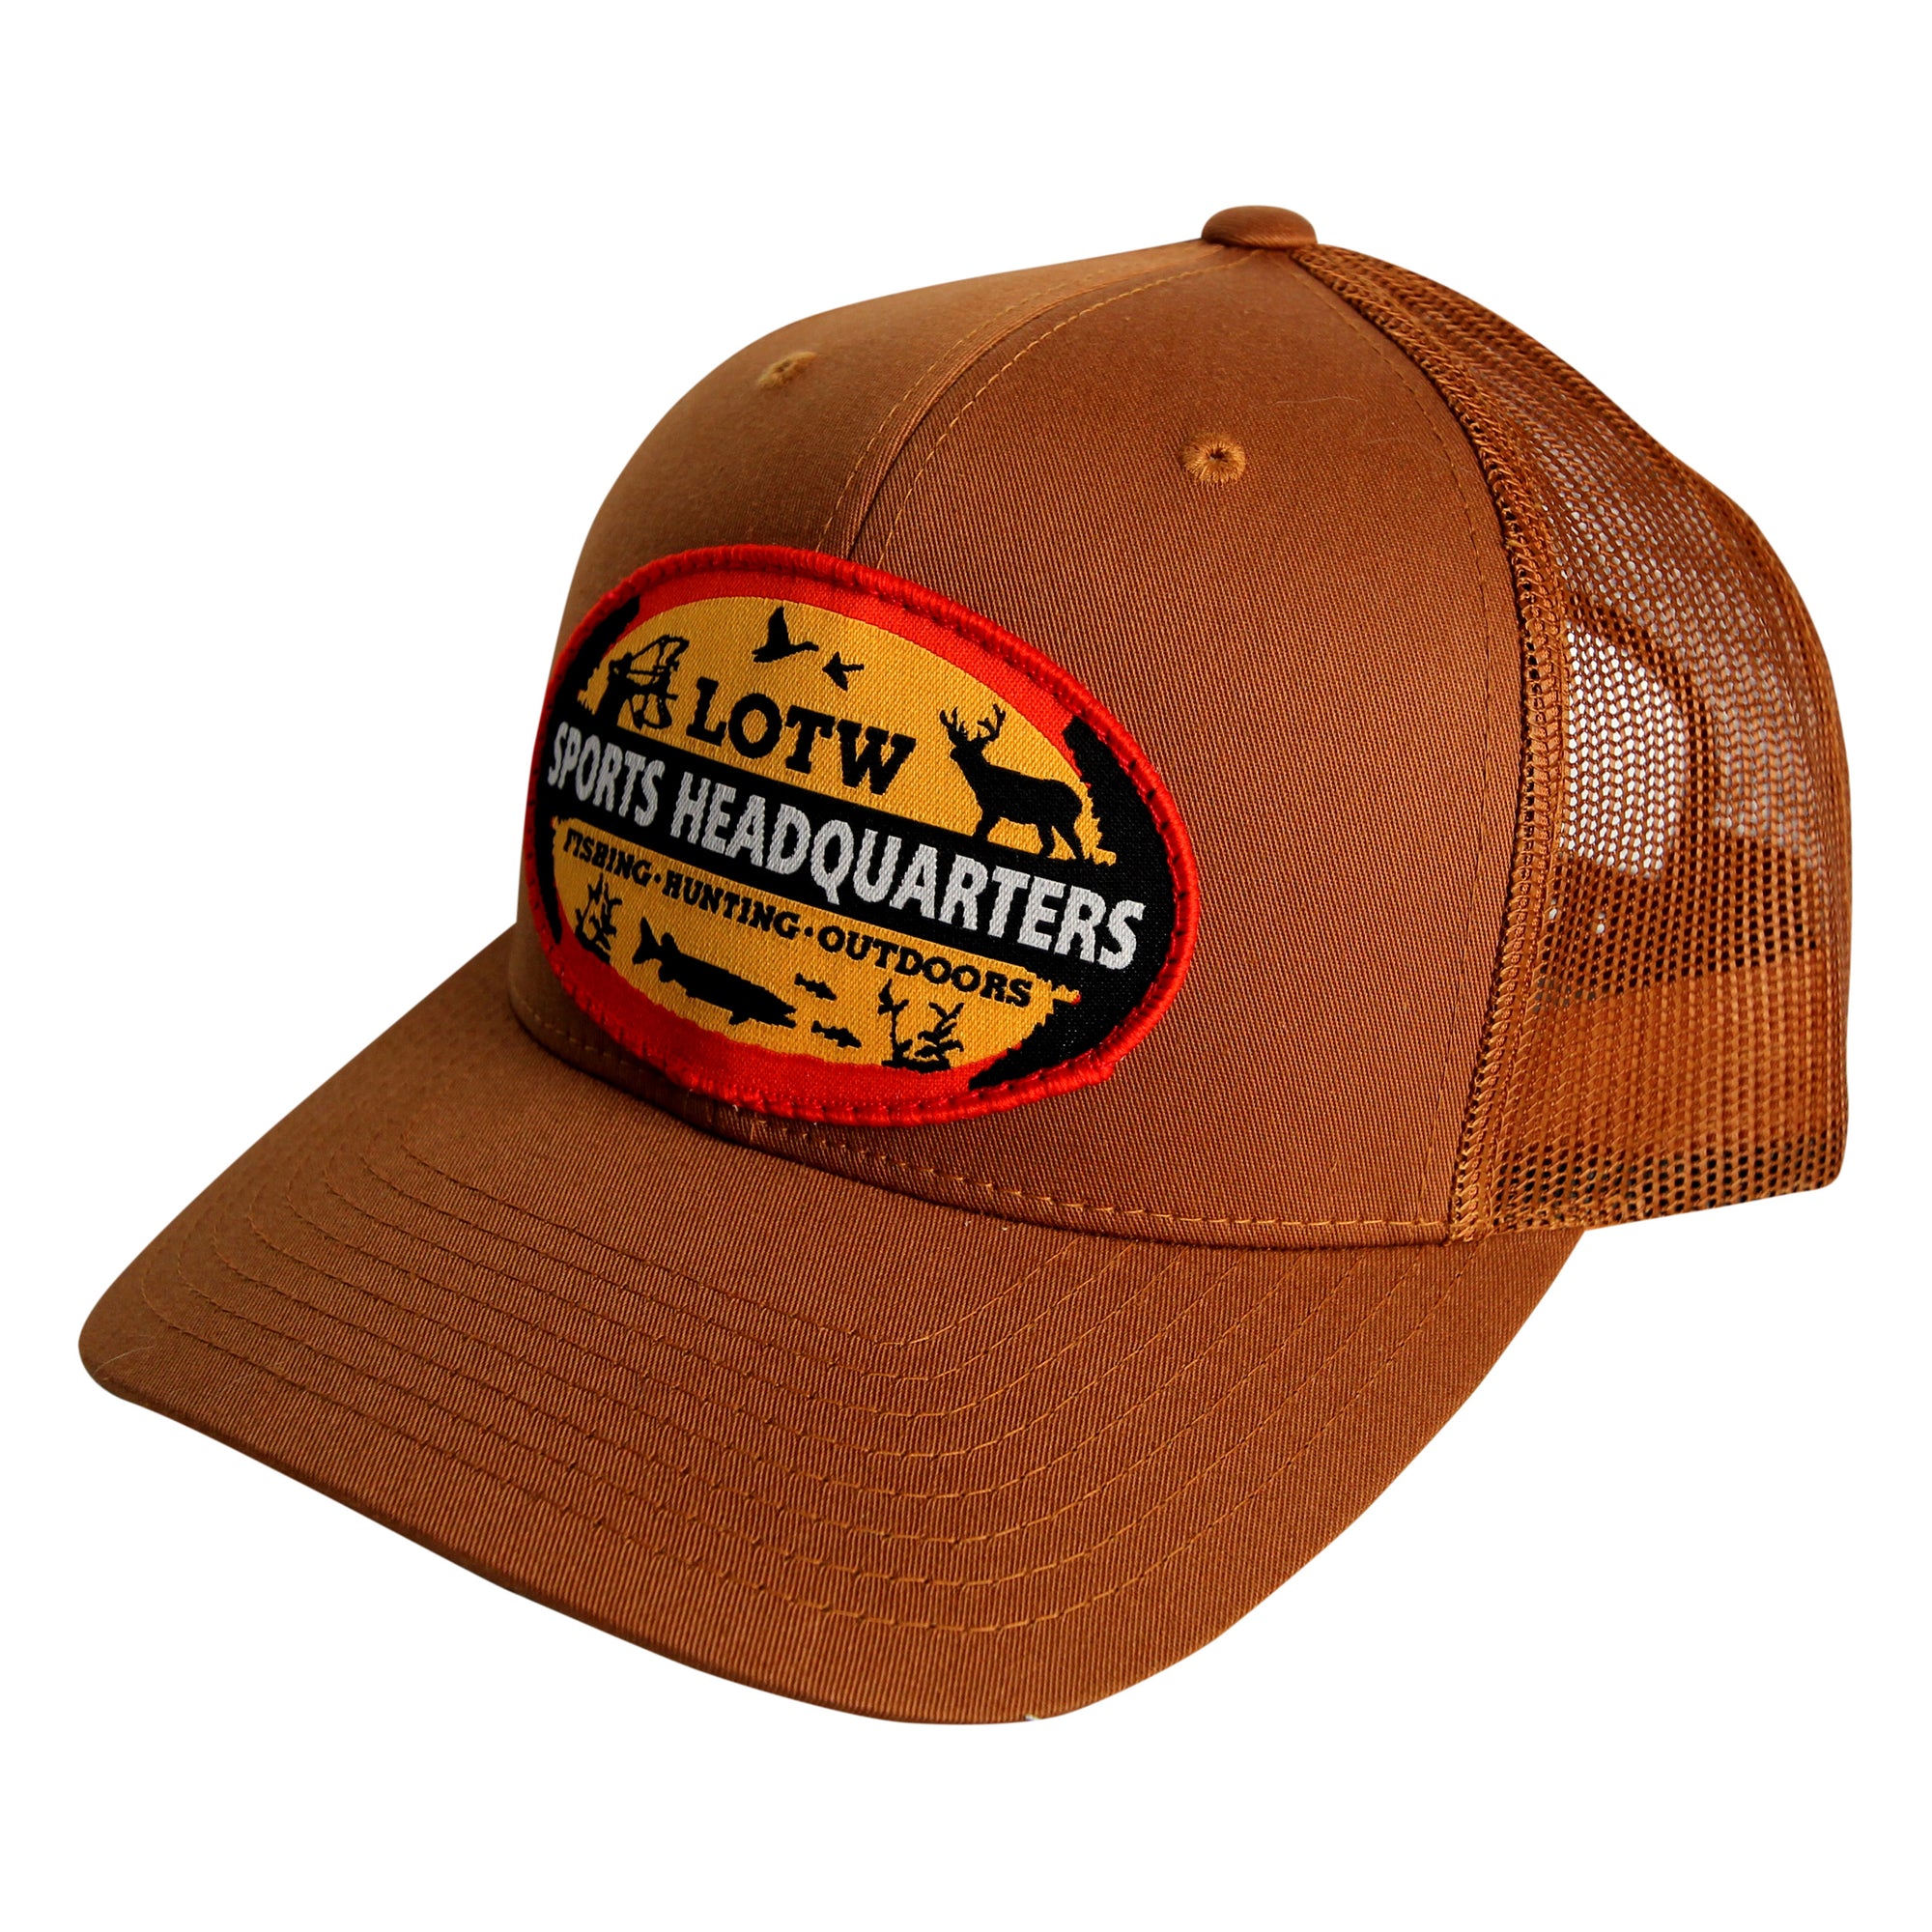 LOTW Sports Headquarters Retro Snapback Trucker Hats - Caramel